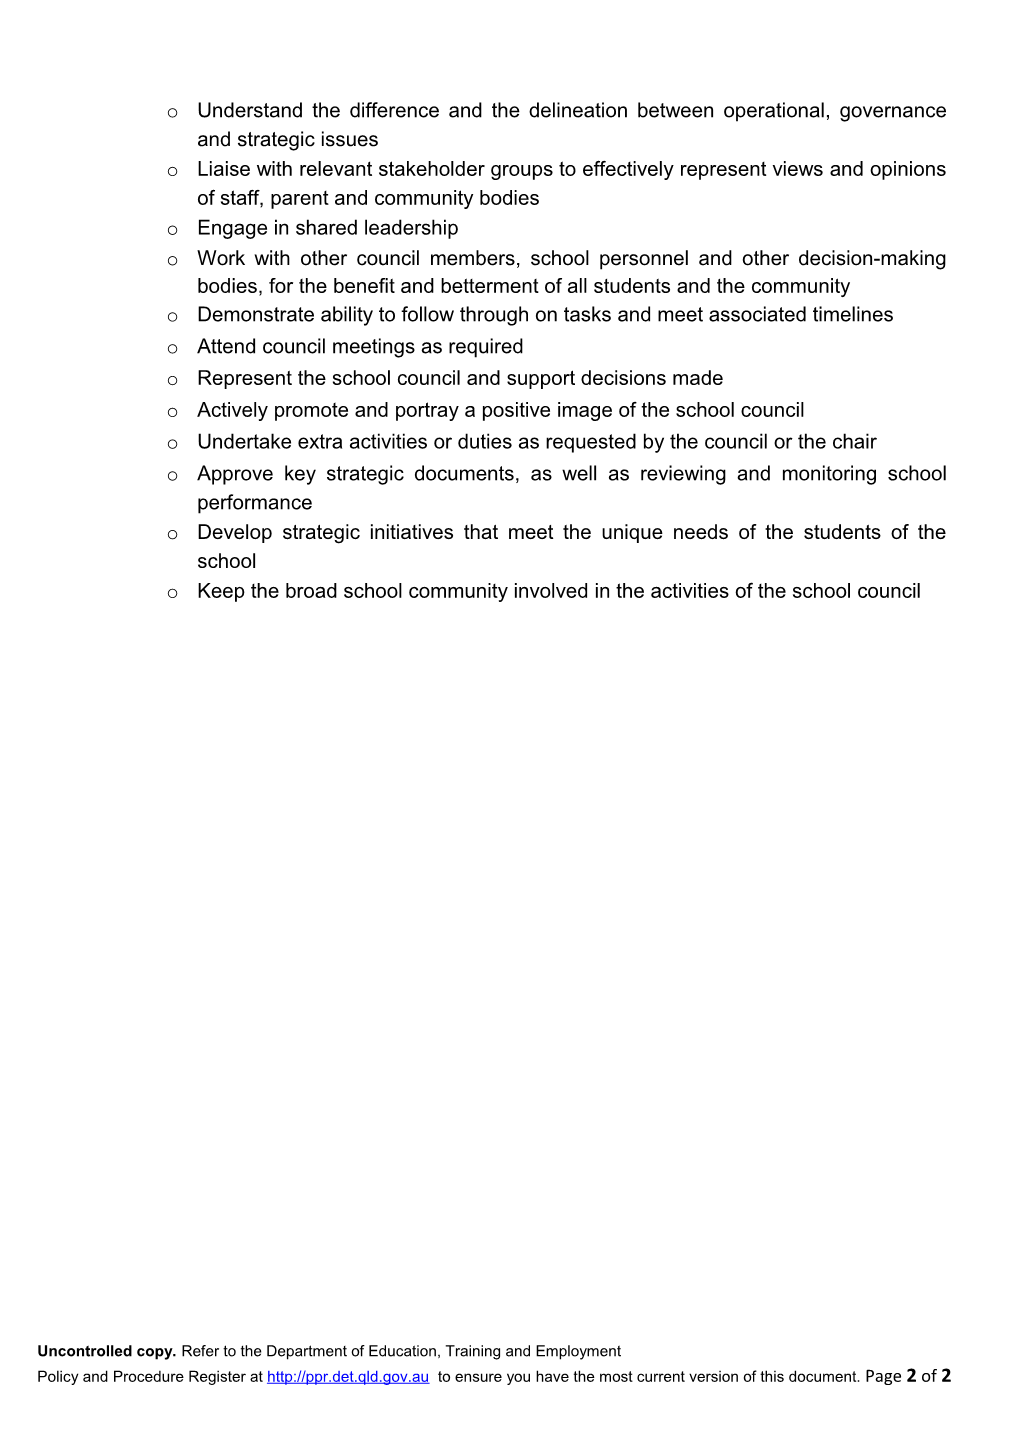 IPS - Role Description - School Council Members - Fact Sheet